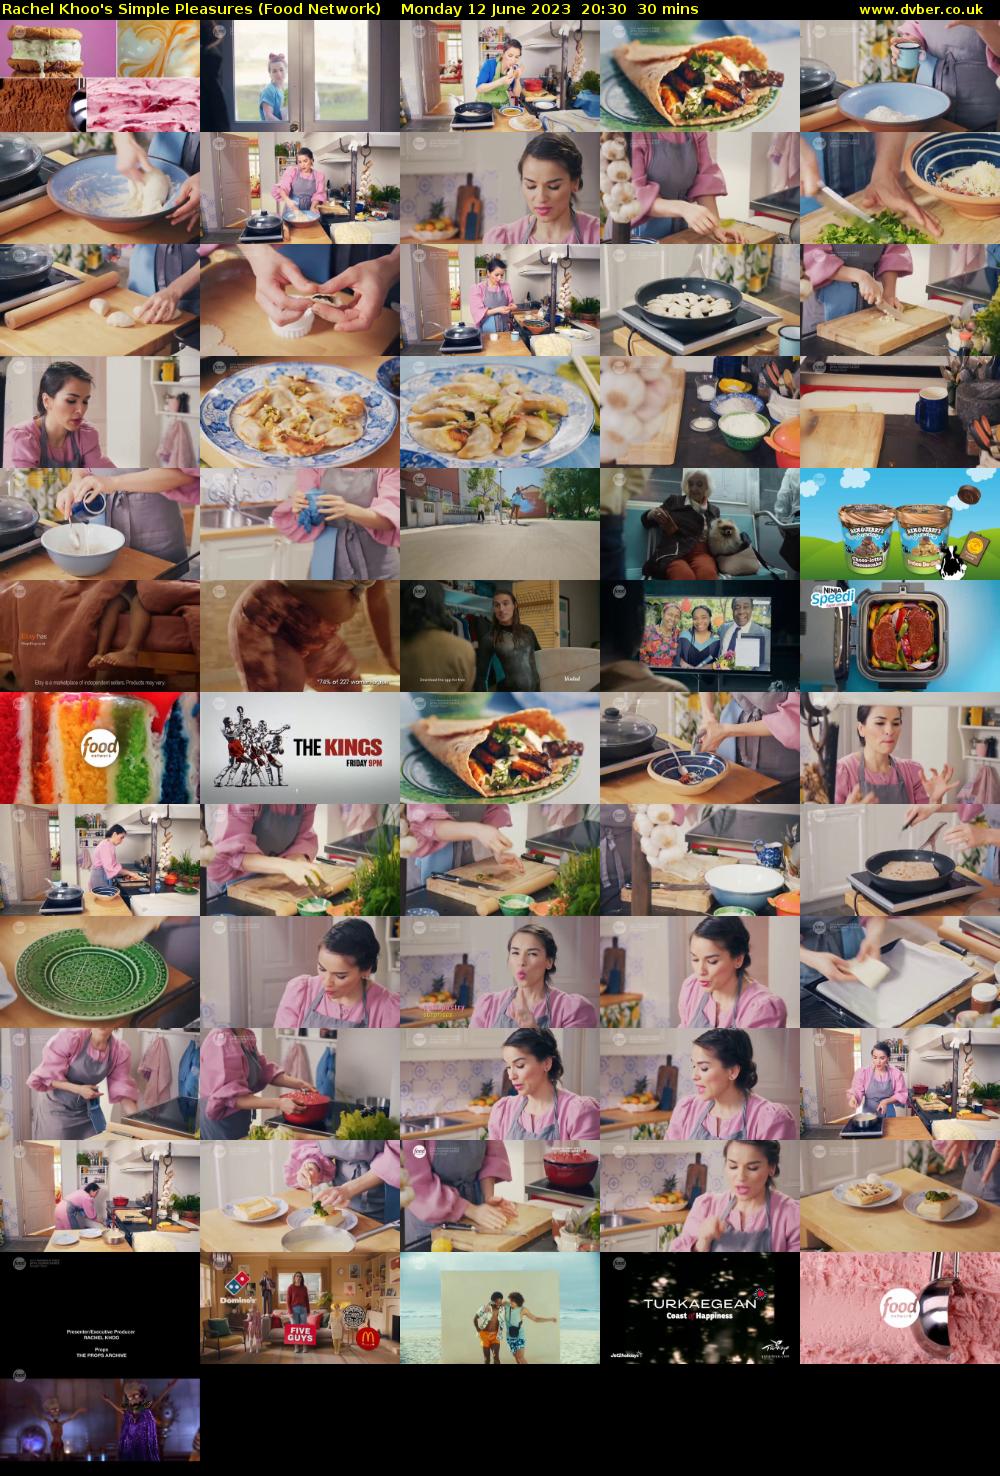 Rachel Khoo's Simple Pleasures (Food Network) Monday 12 June 2023 20:30 - 21:00